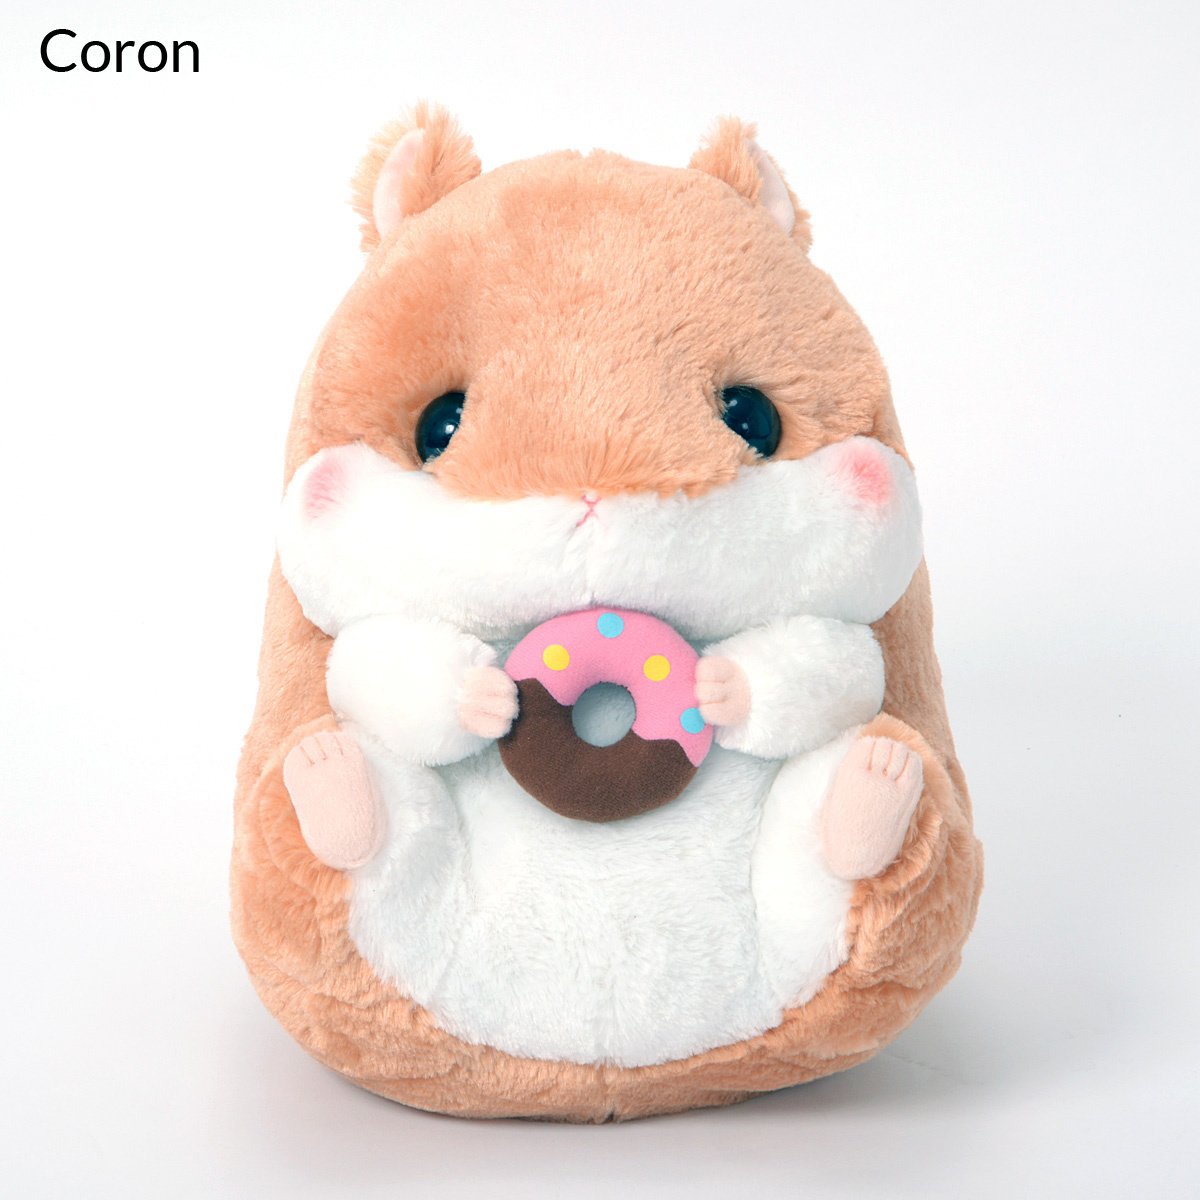 Hamster Plushie, Amuse Coroham Coron Cafe Plush Collection Coron with Donut Brown BIG